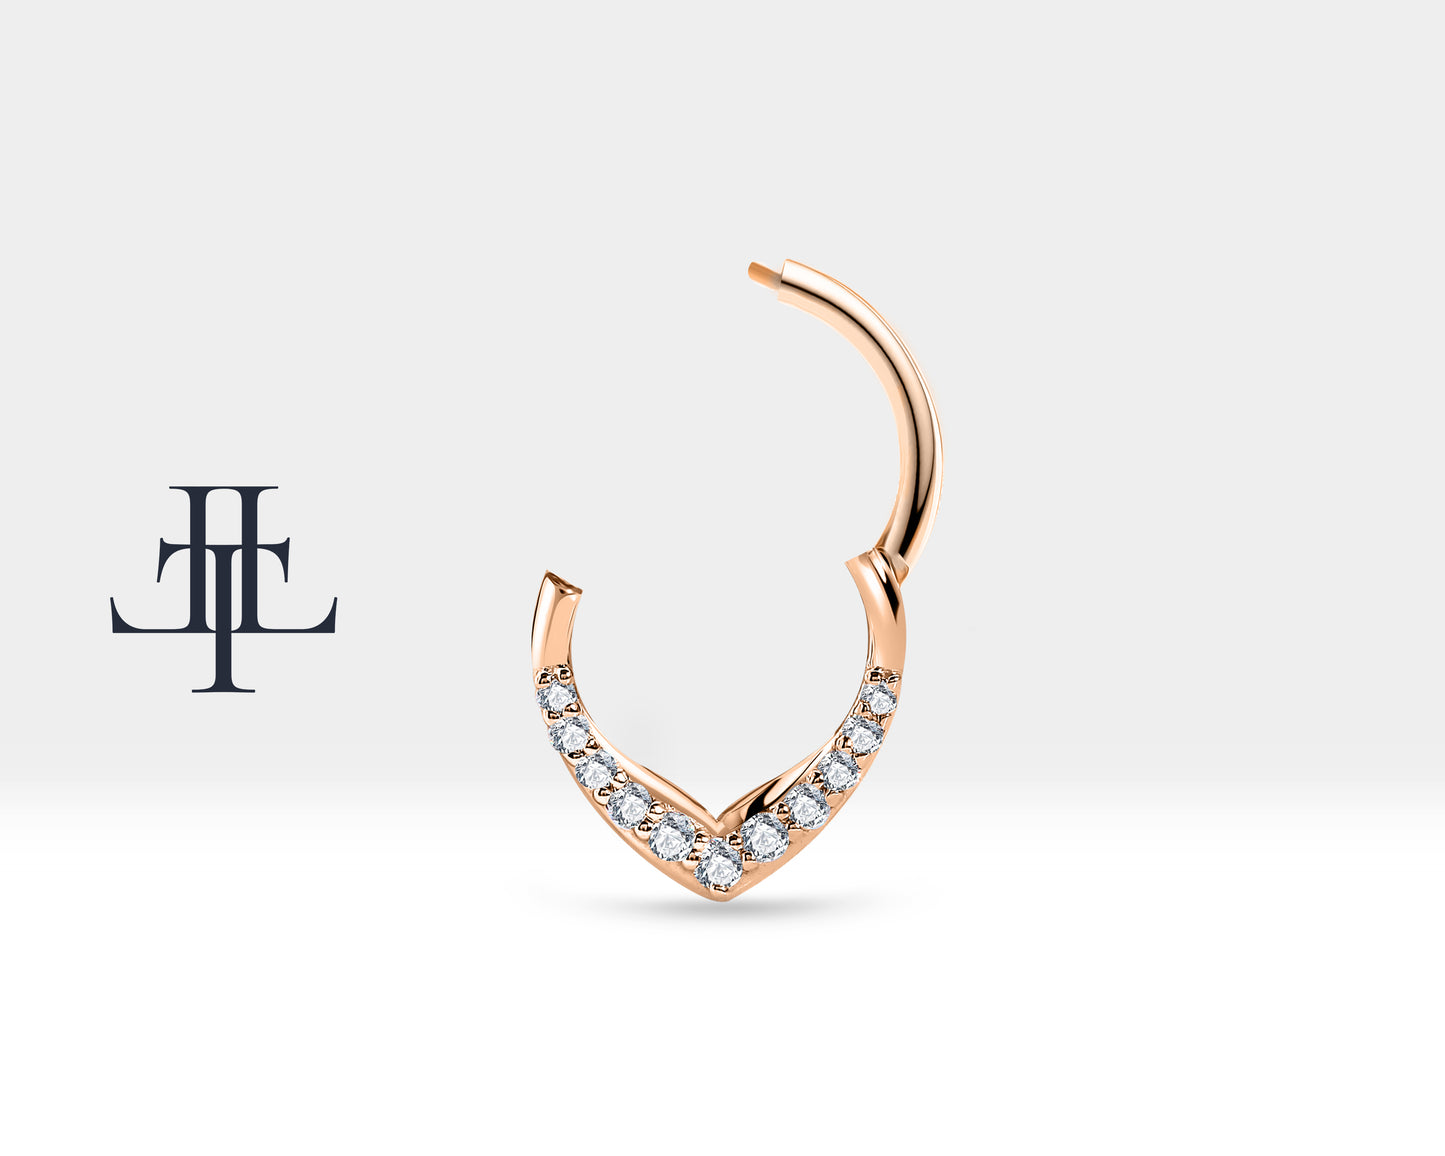 Cartilage Hoop Diamond Clicker Piercing, Drop Design Clicker, 14K Yellow Solid Gold